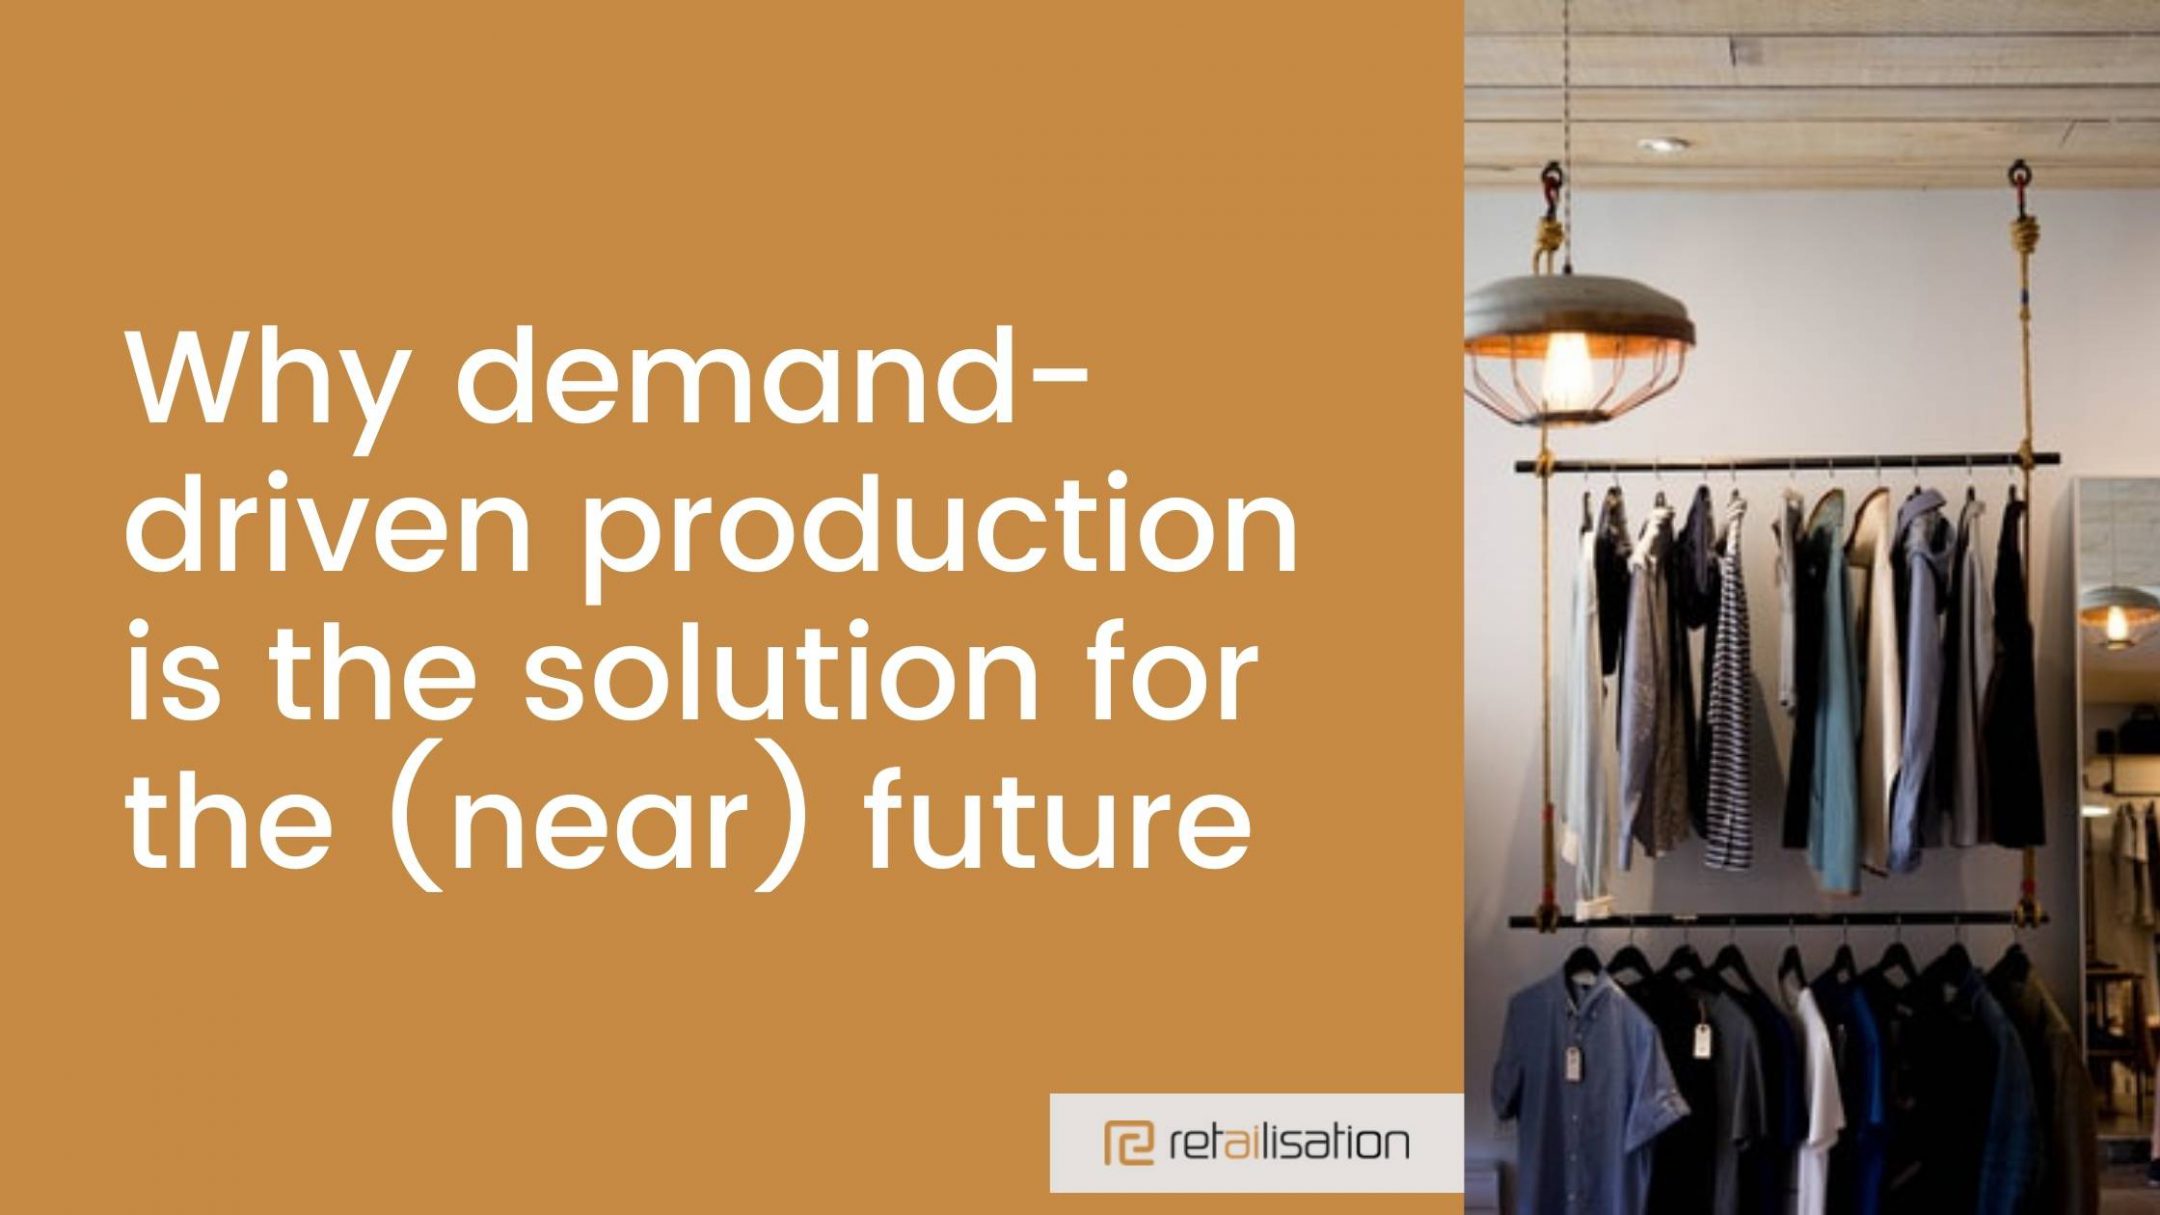 demand-driven production